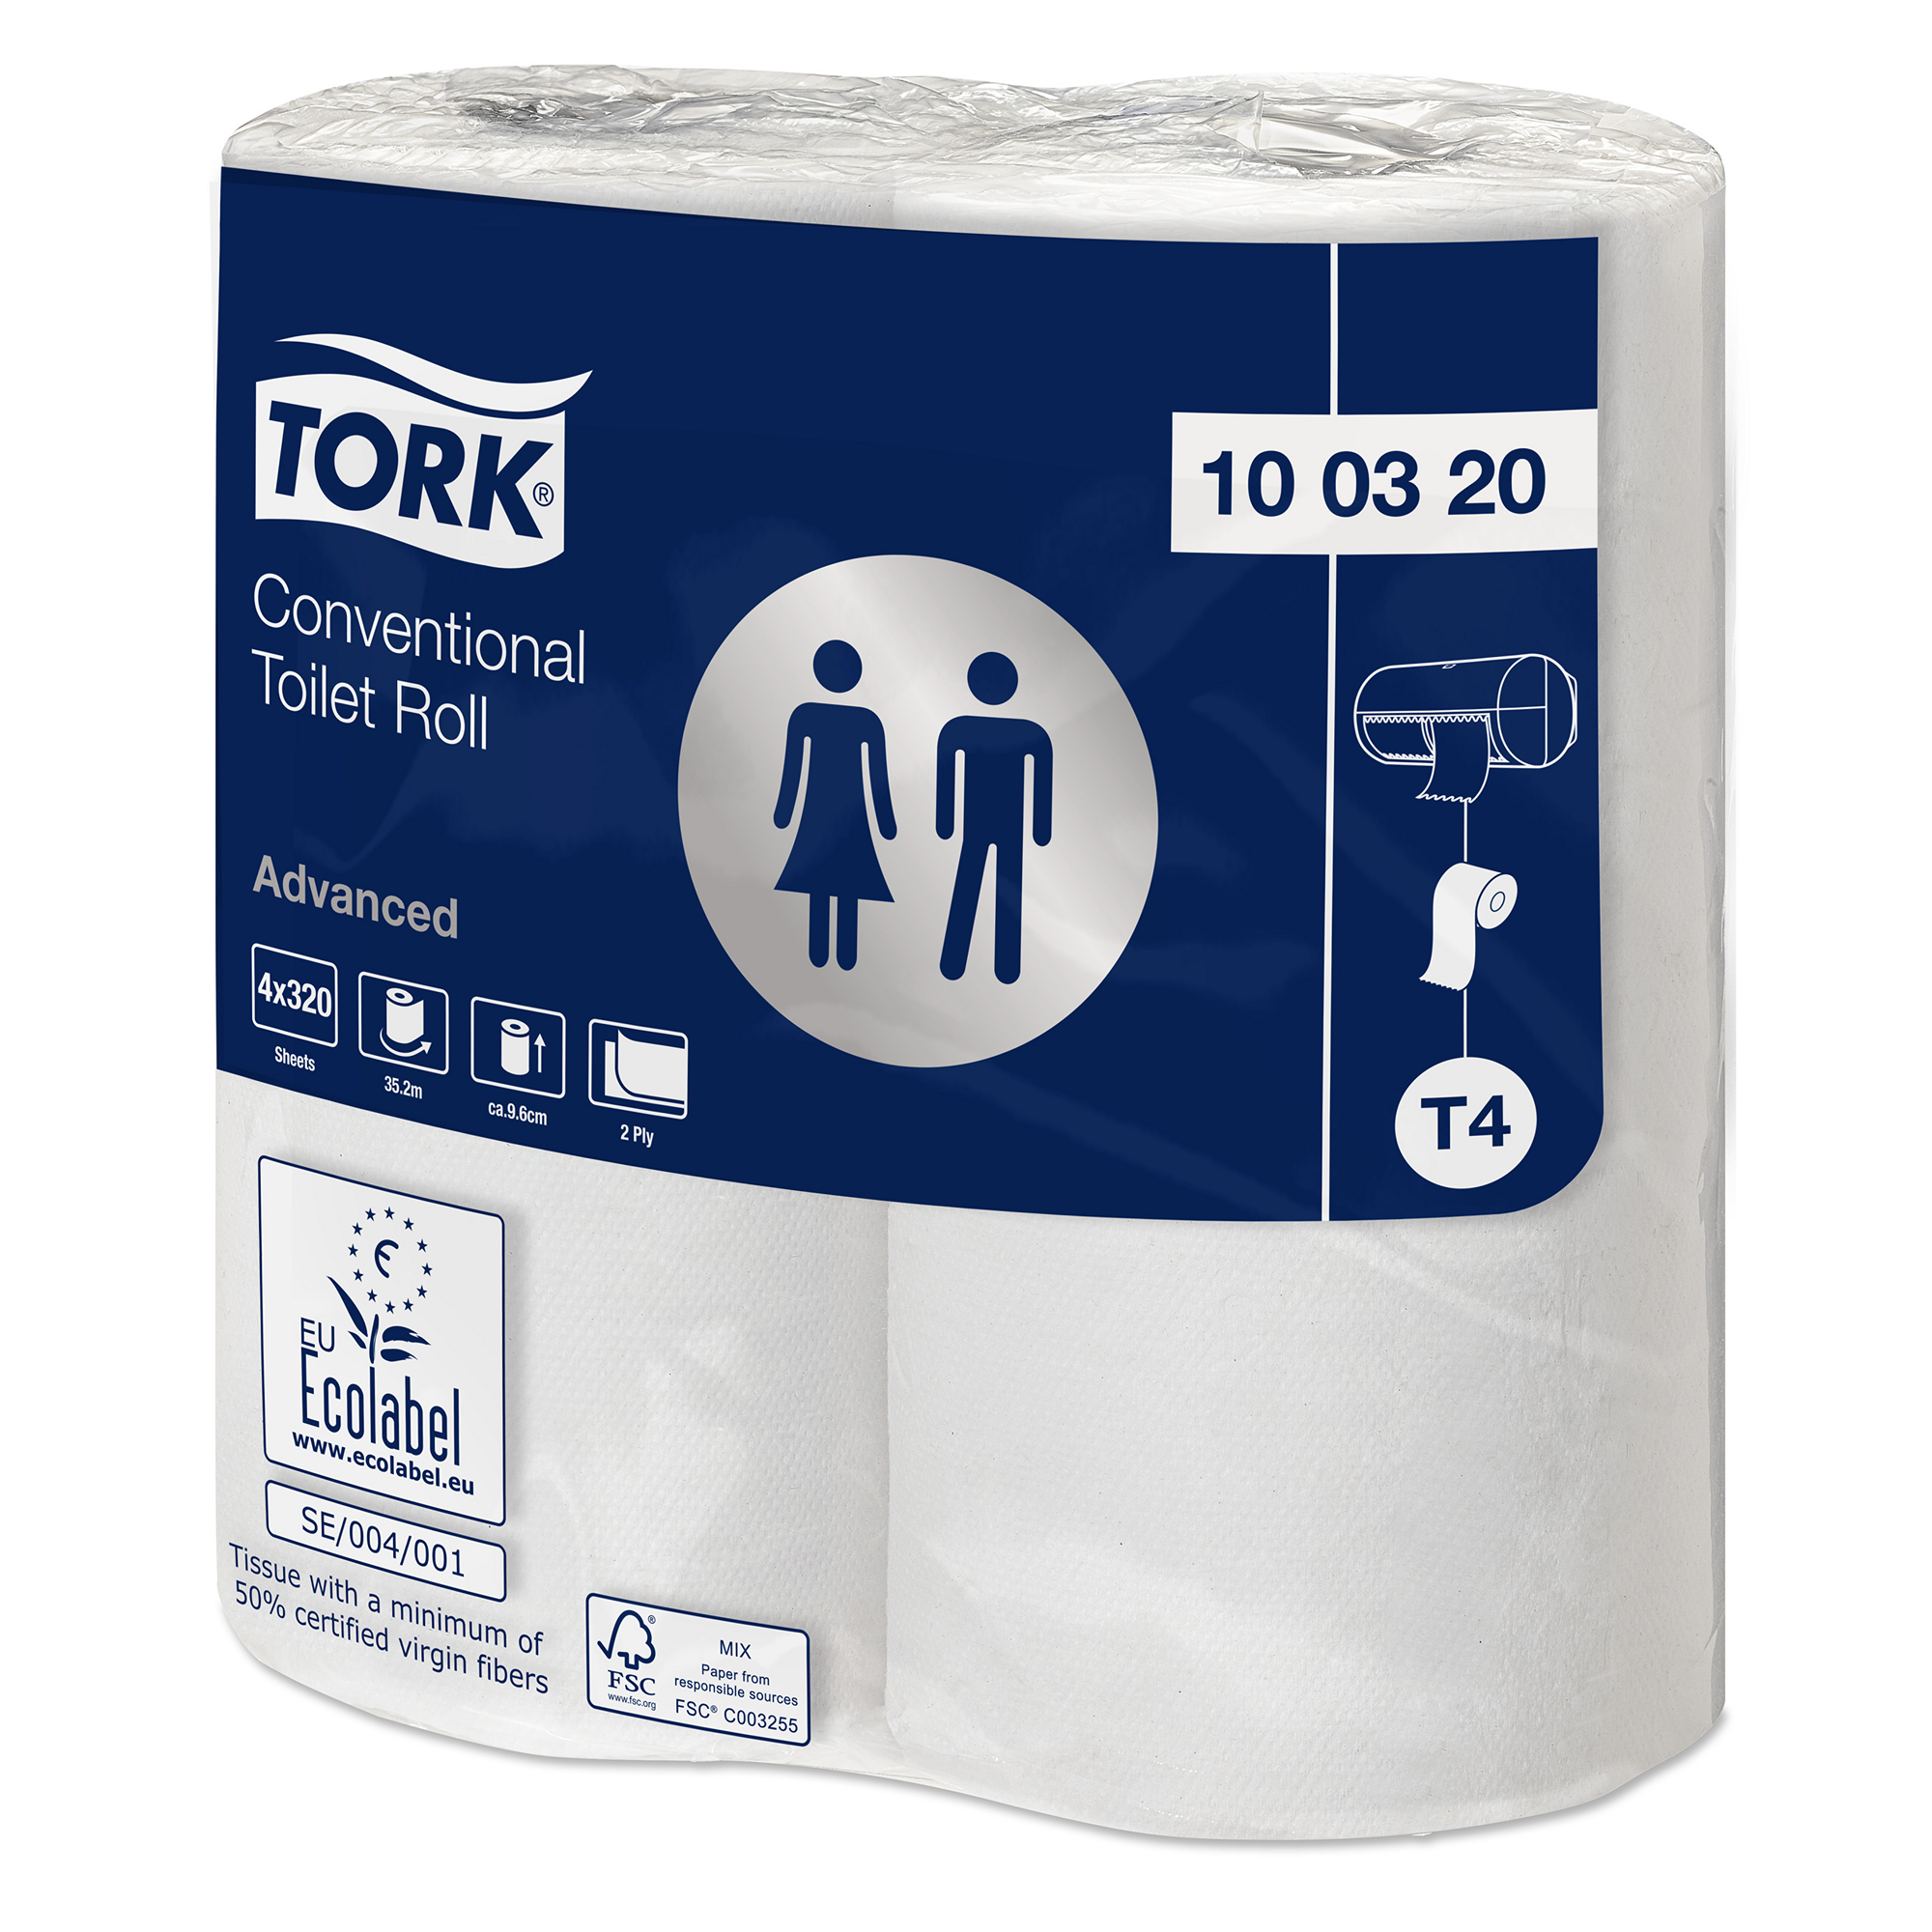 Tork Conv Toilet Roll 2ply 320 Sheet